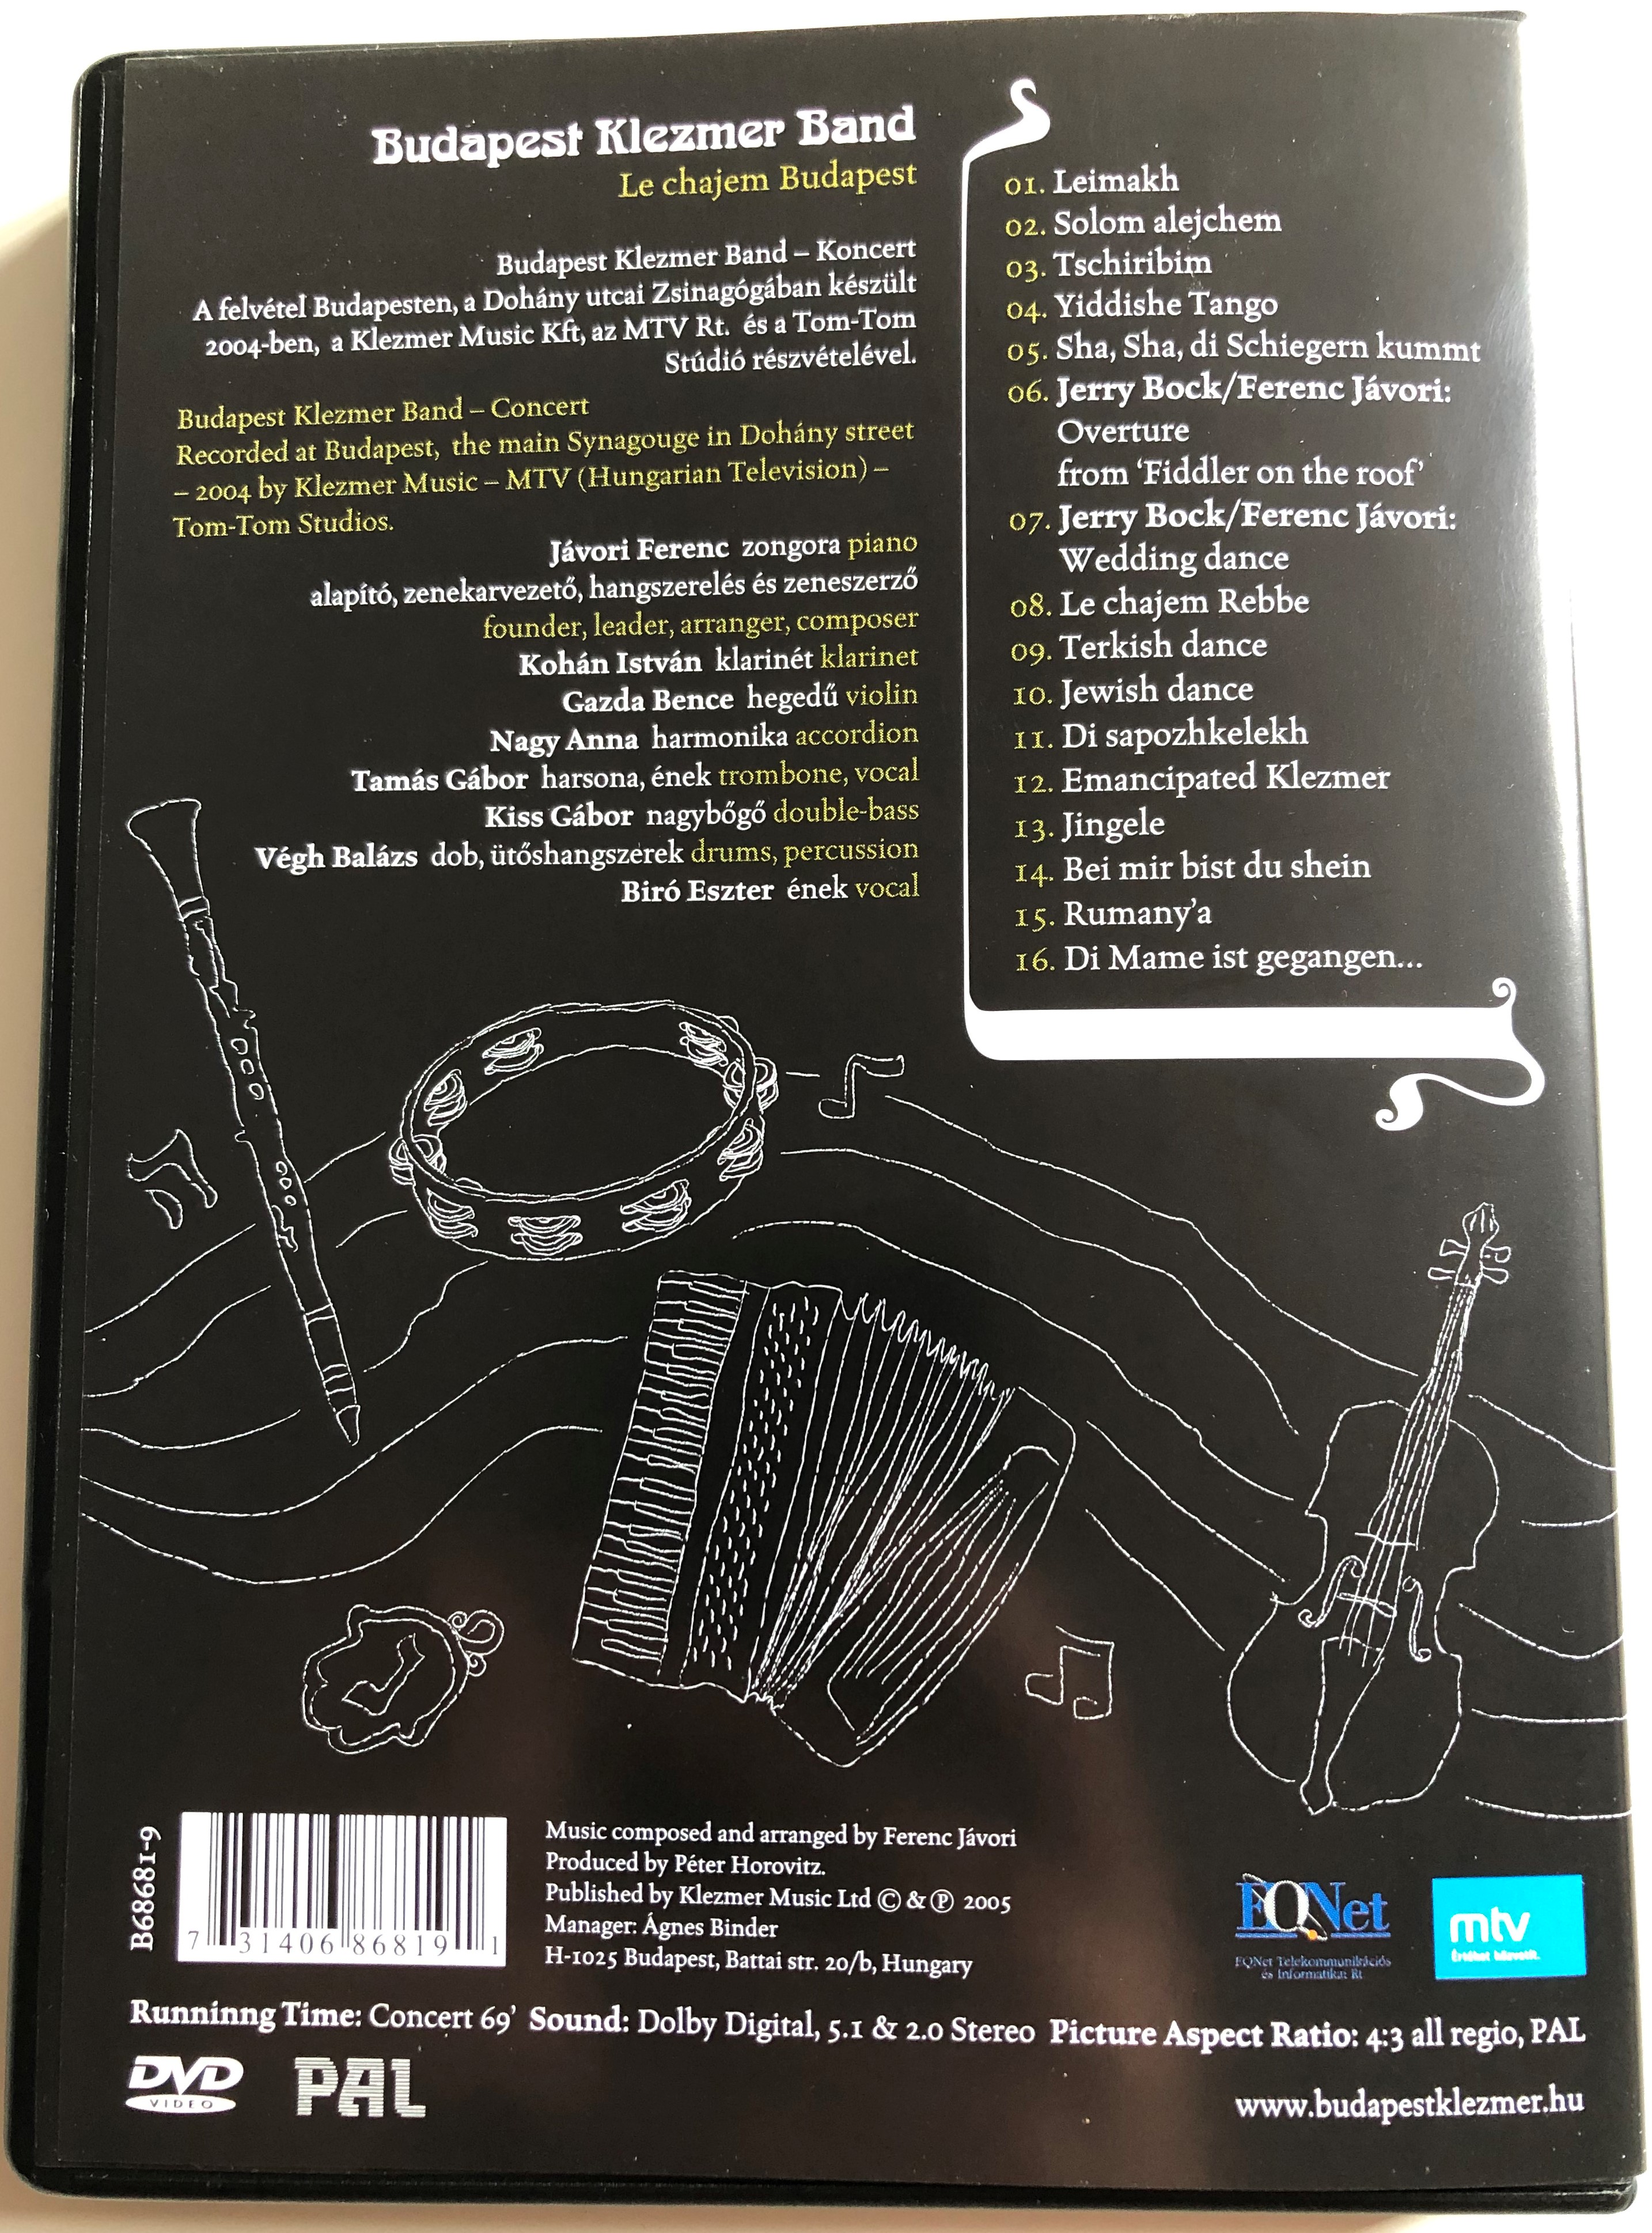 Le chajem Budapest - Budapest Klezmer Band DVD 2005 / Music composed &  arranged by Ferenc Jávori / Klezmer Music Ltd - bibleinmylanguage